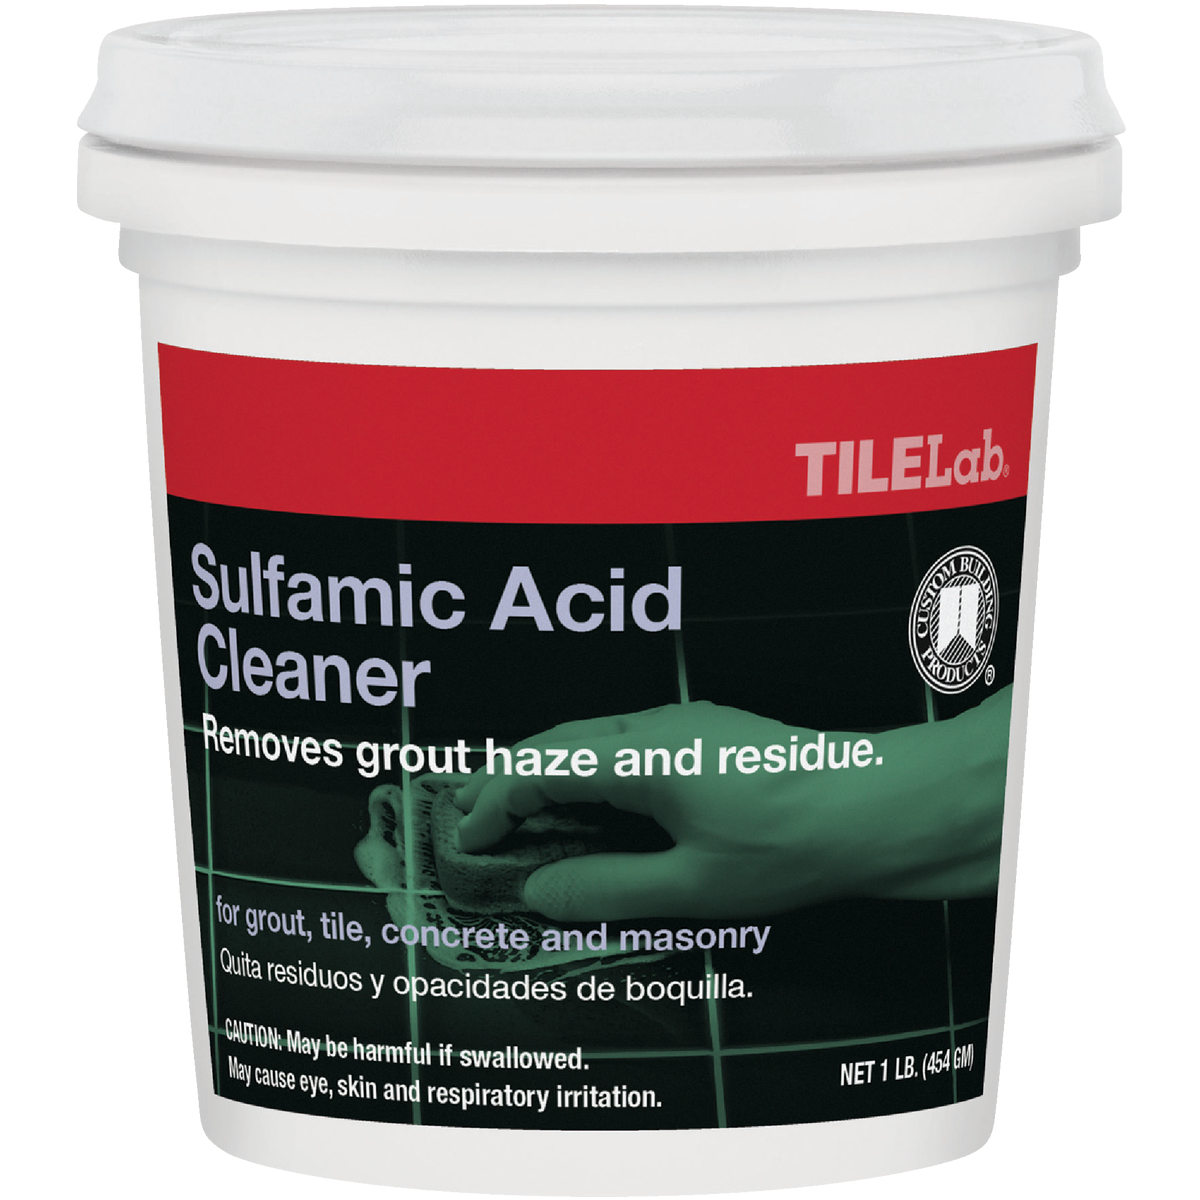 Sulfamic Acid Cleaner